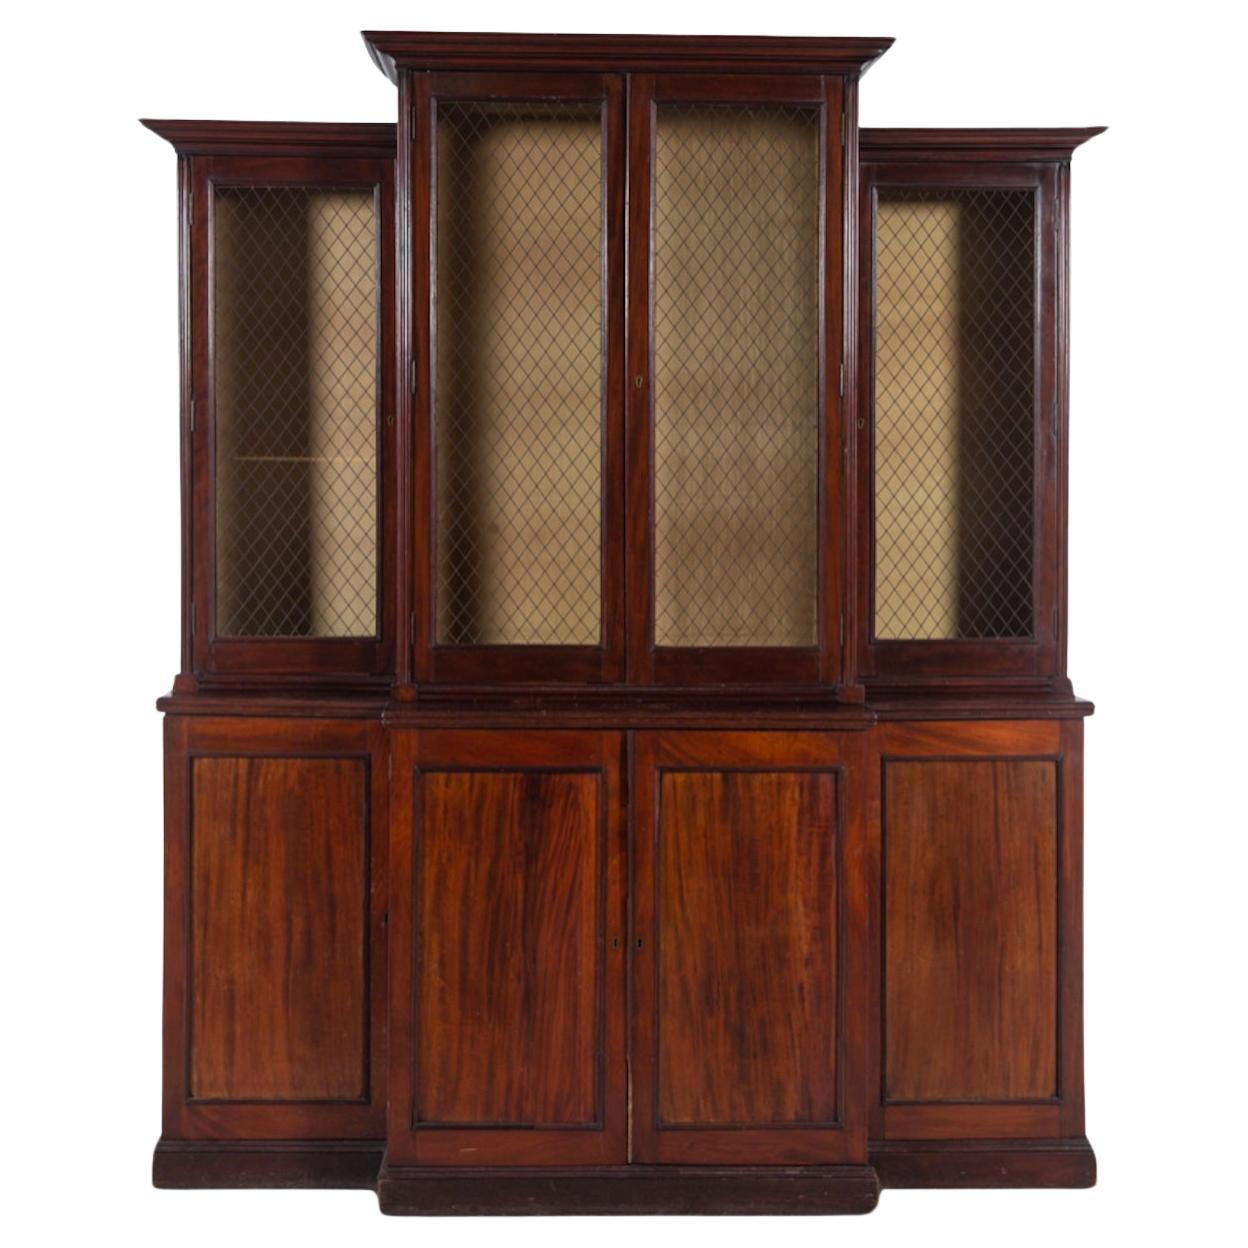 A Regency Mahogany Breakfront Bookcase 19th Century, Grilled Upper Doors. 1820